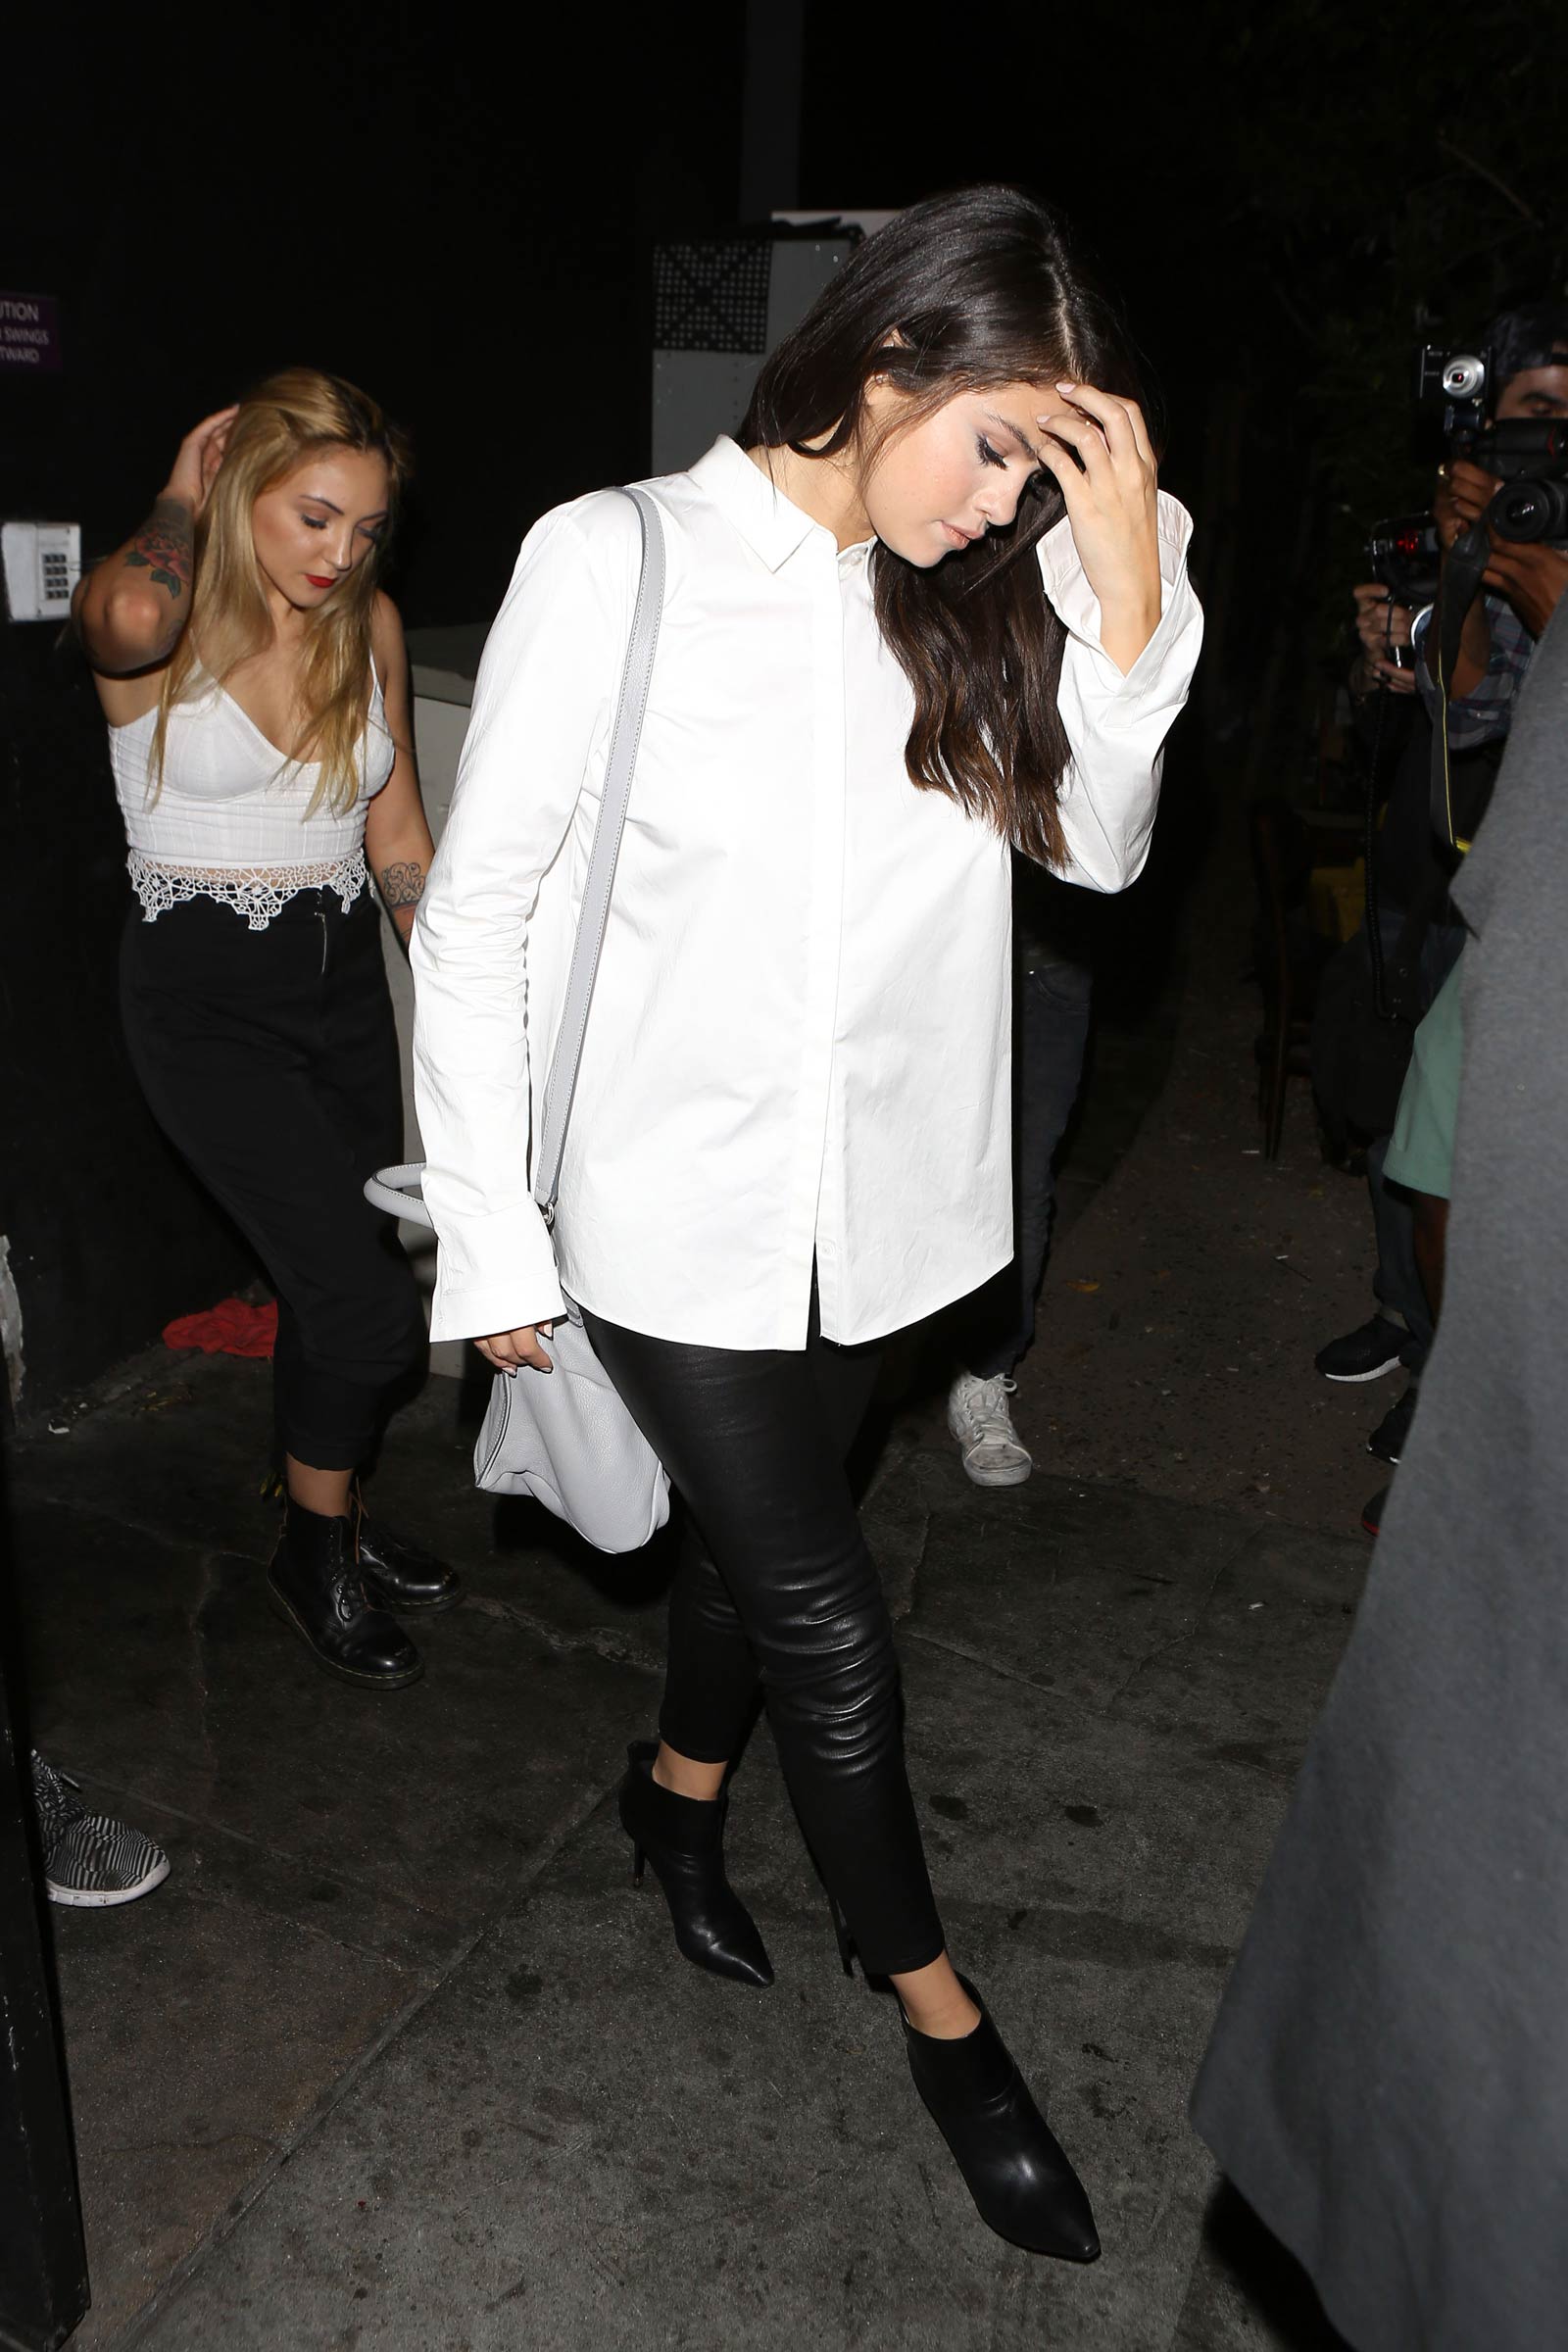 Selena Gomez seen leaving The Nice Guy restaurant